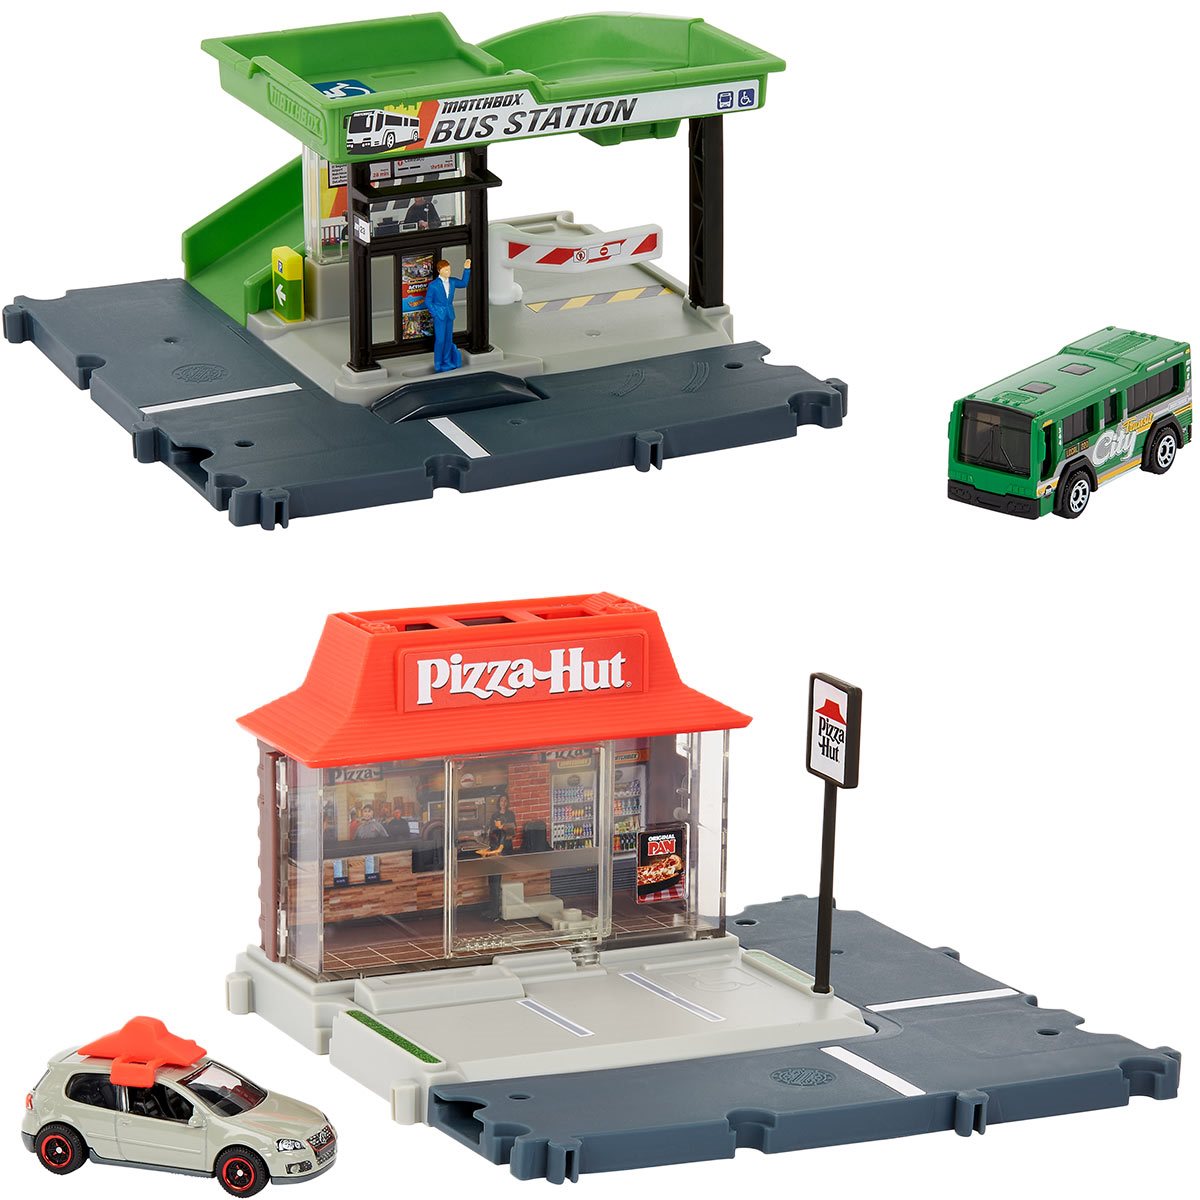 Matchbox - Bus Station - Pizza Hut - Action Drivers Expansion Playset